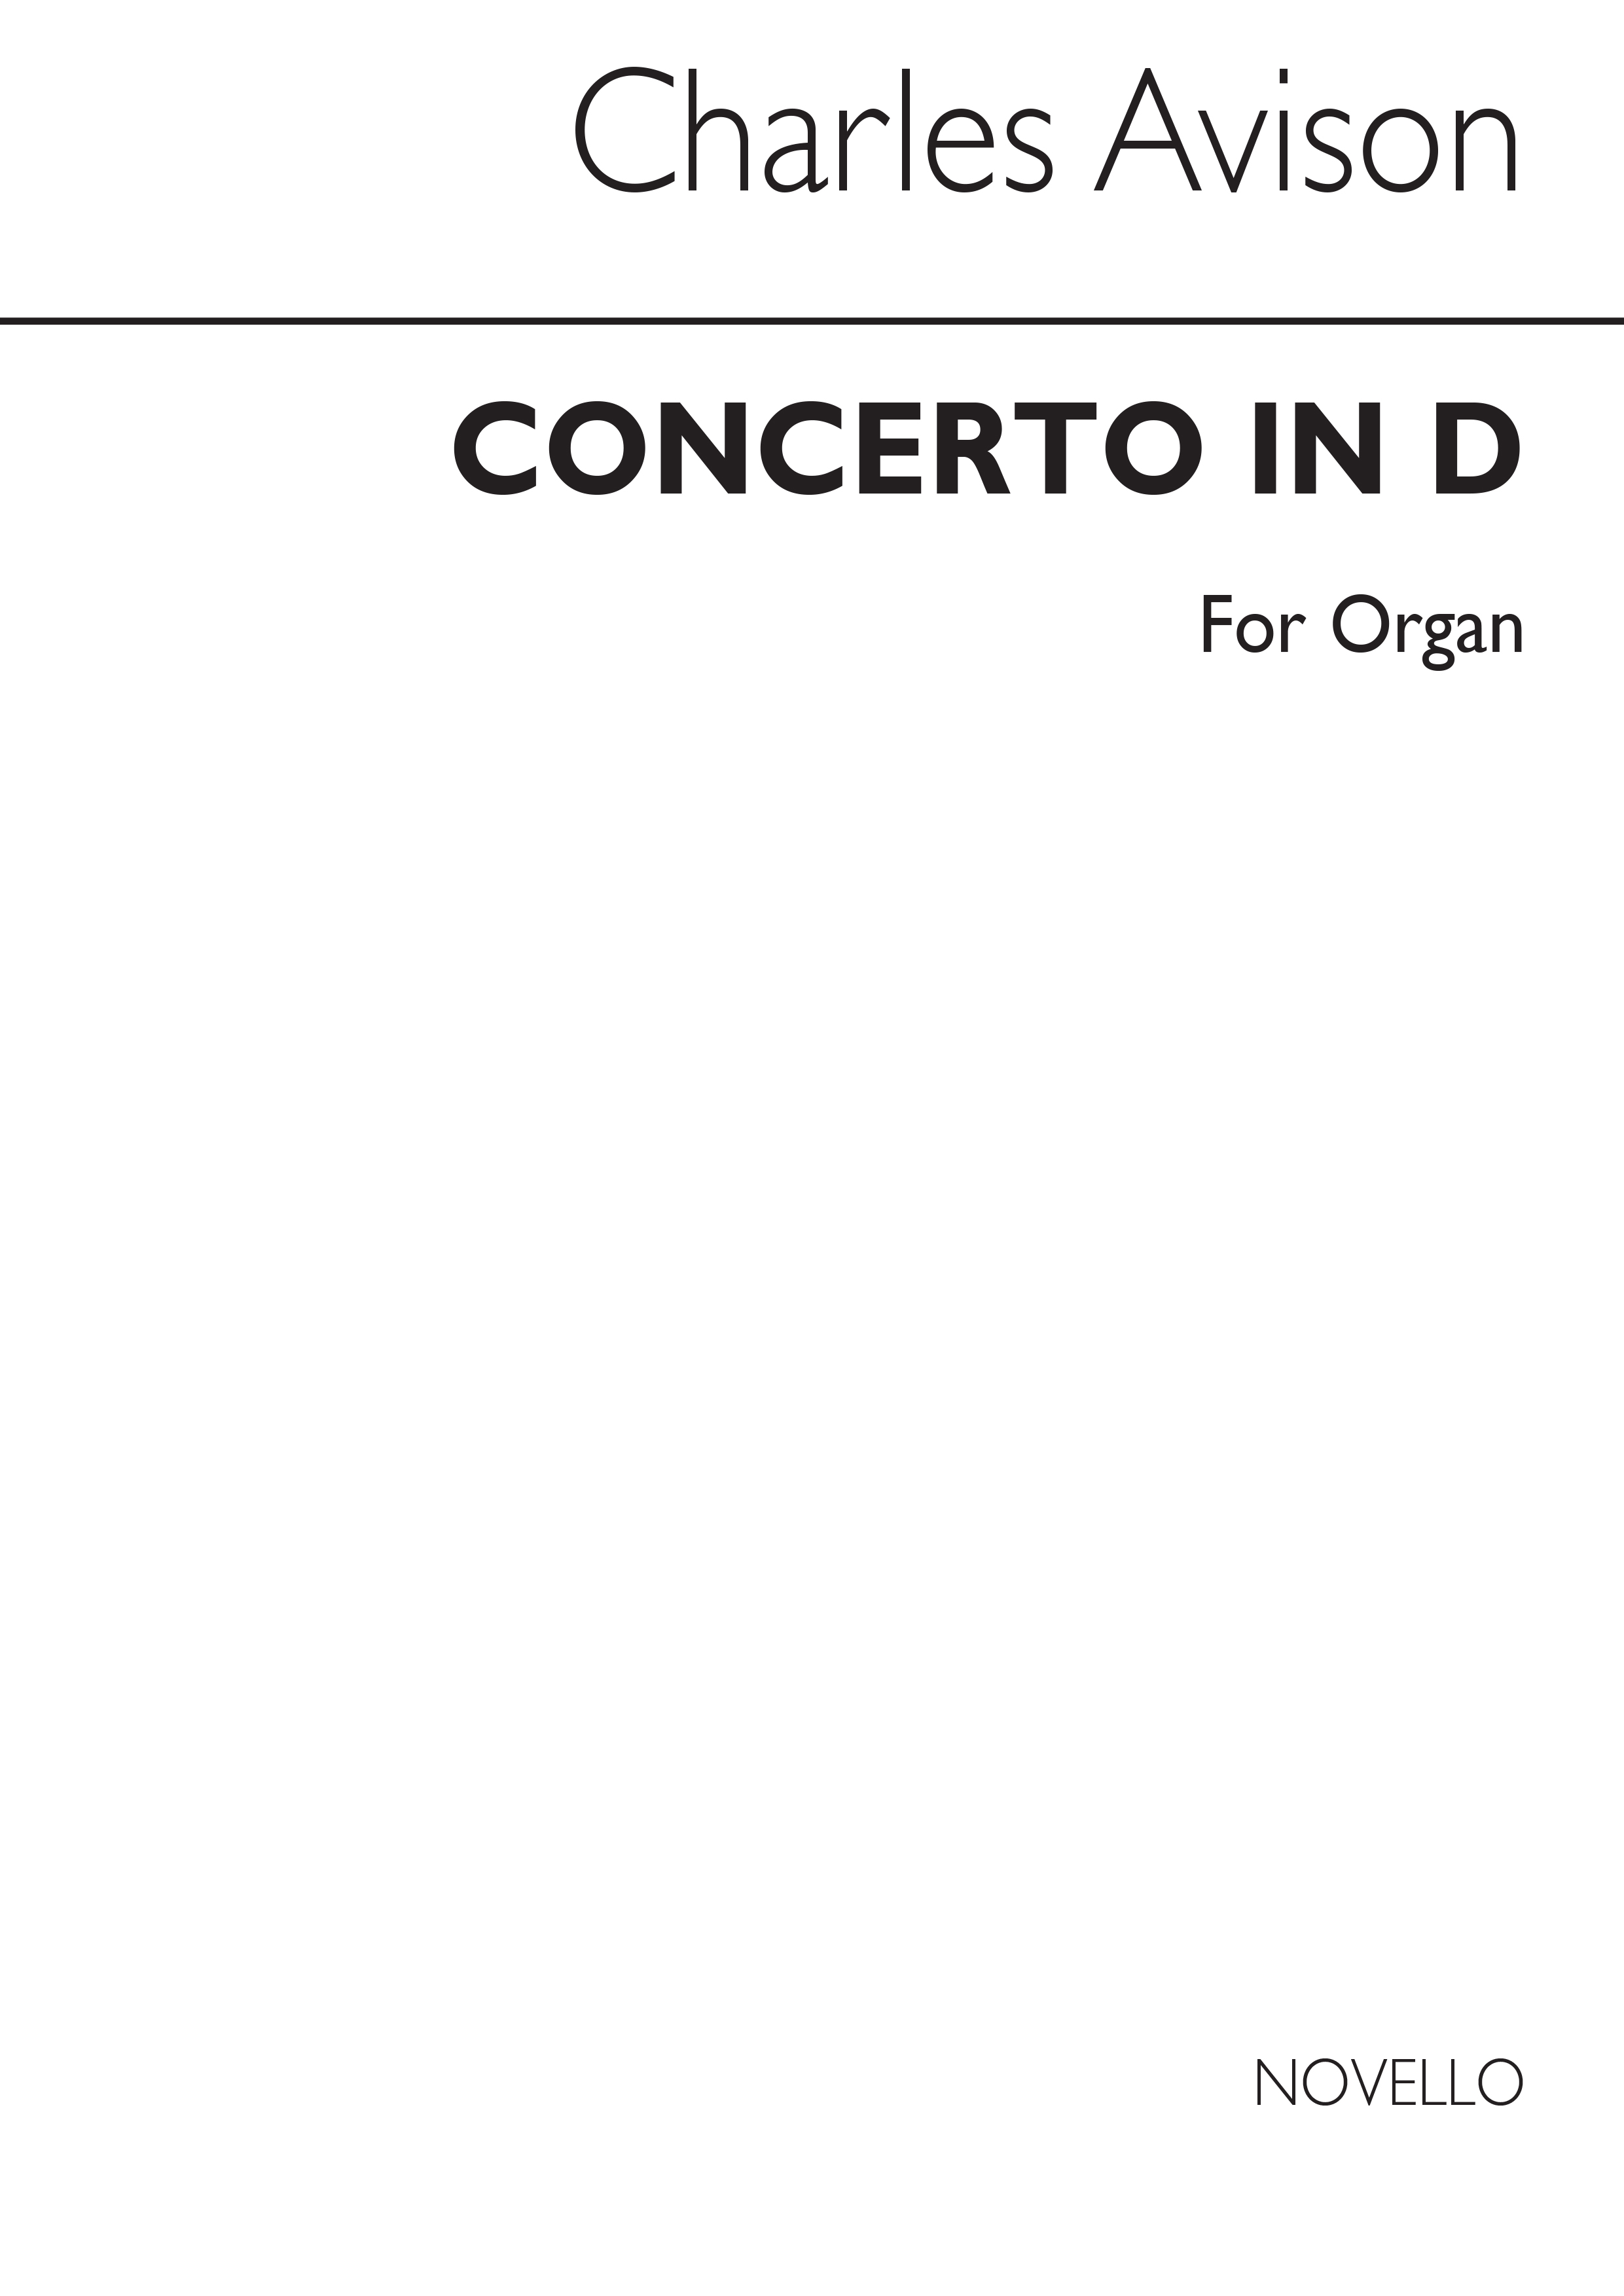 Charles Avison: Concerto In D For Organ